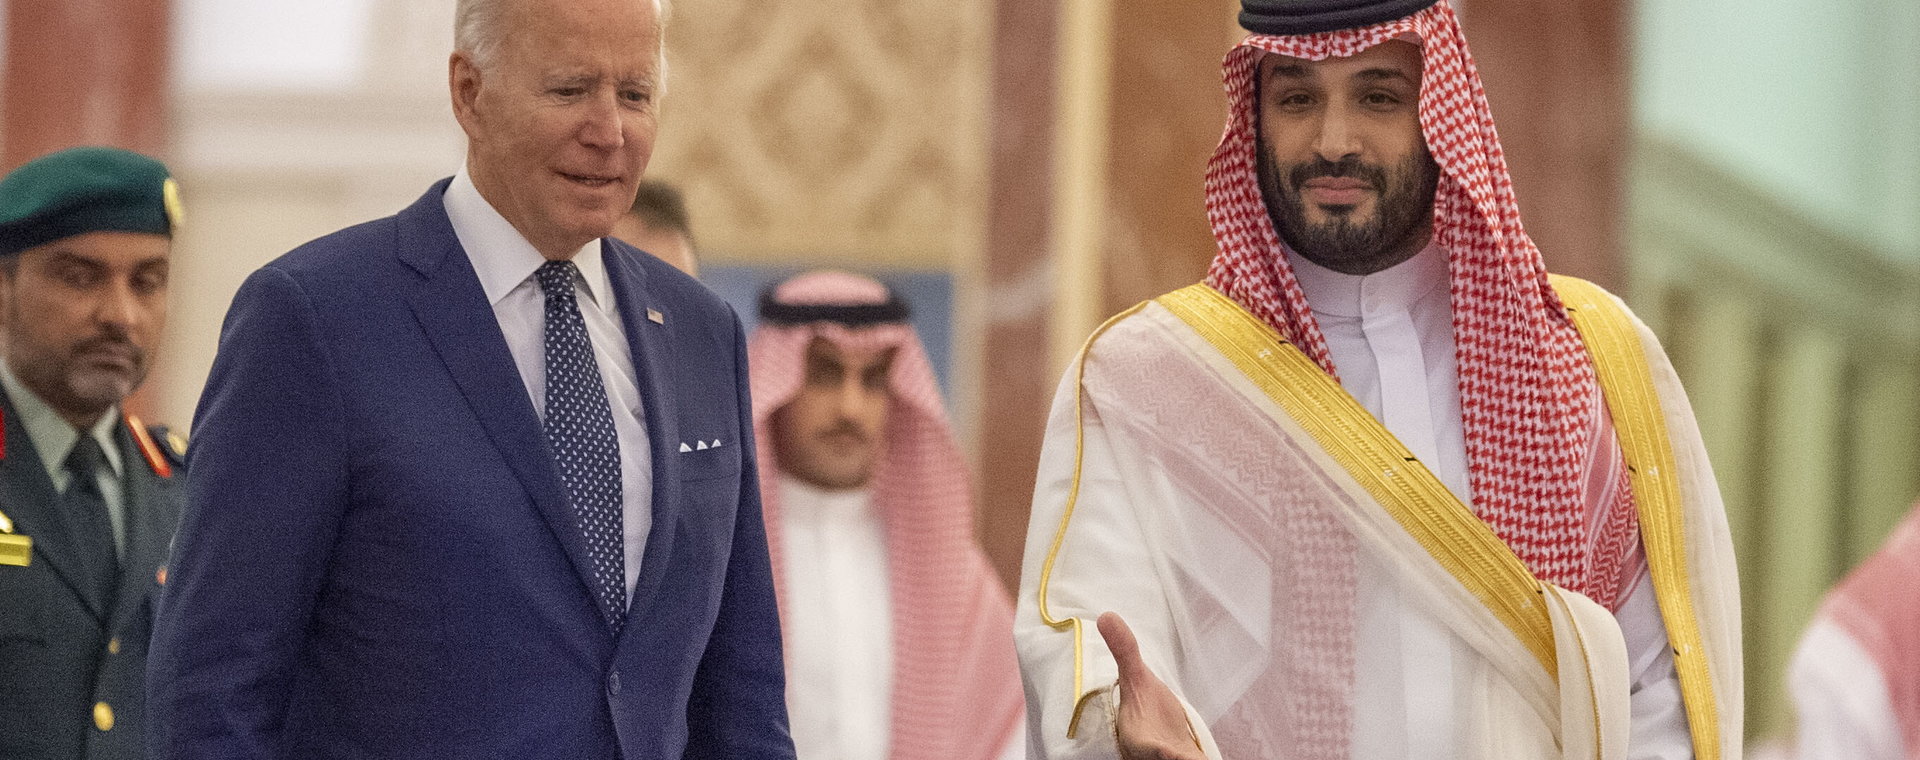 Mohammed bin Salman, saudyjski następca tronu podczas spotkania z Joe Bidenem.